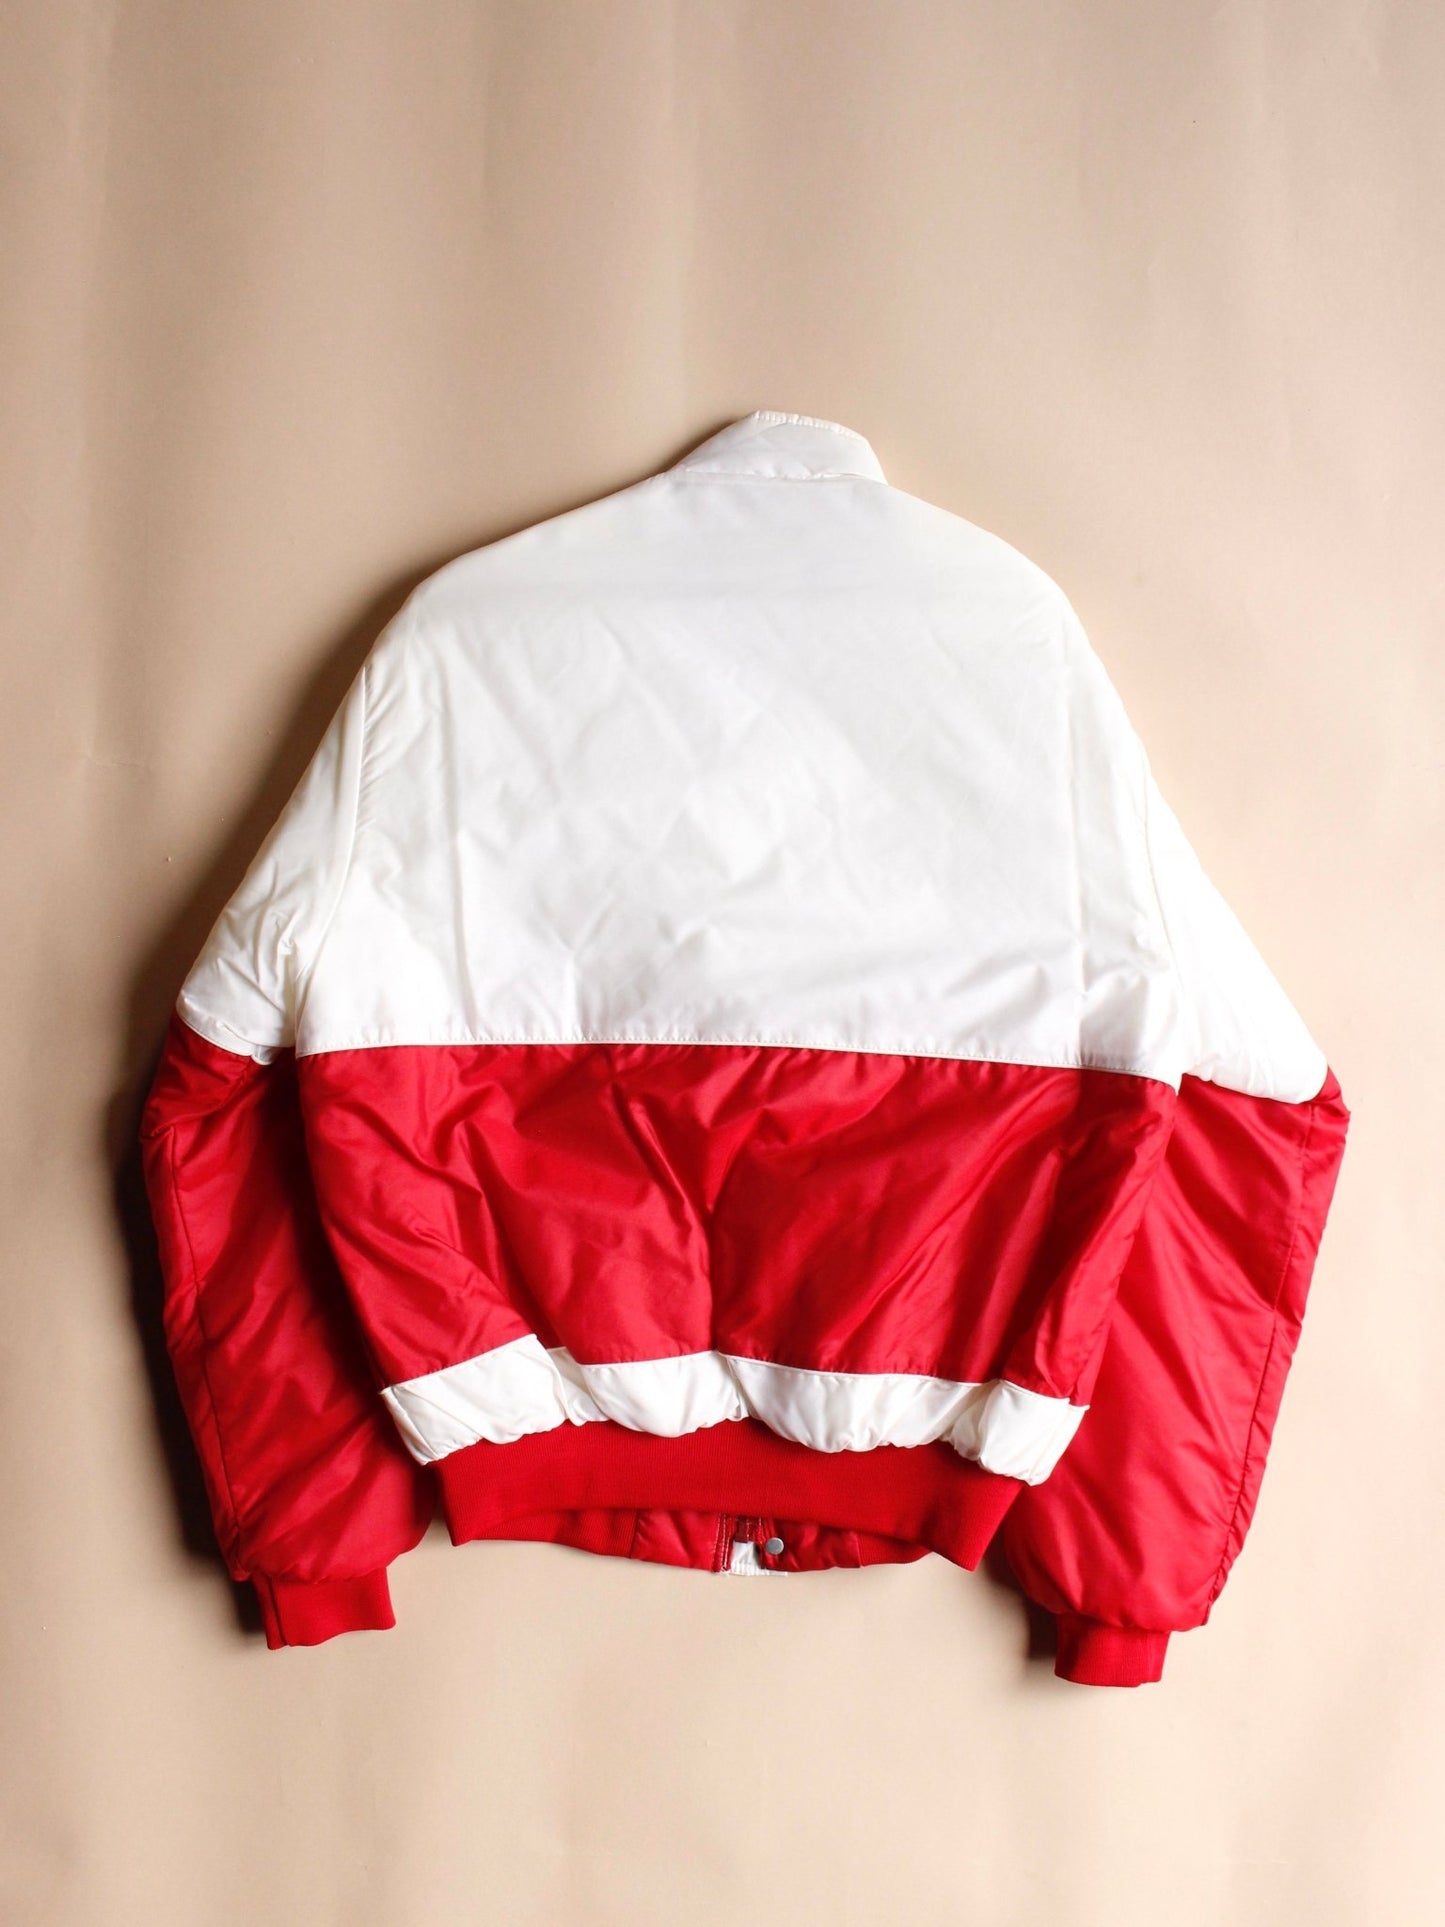 1980s Winston Daytona Racing Jacket